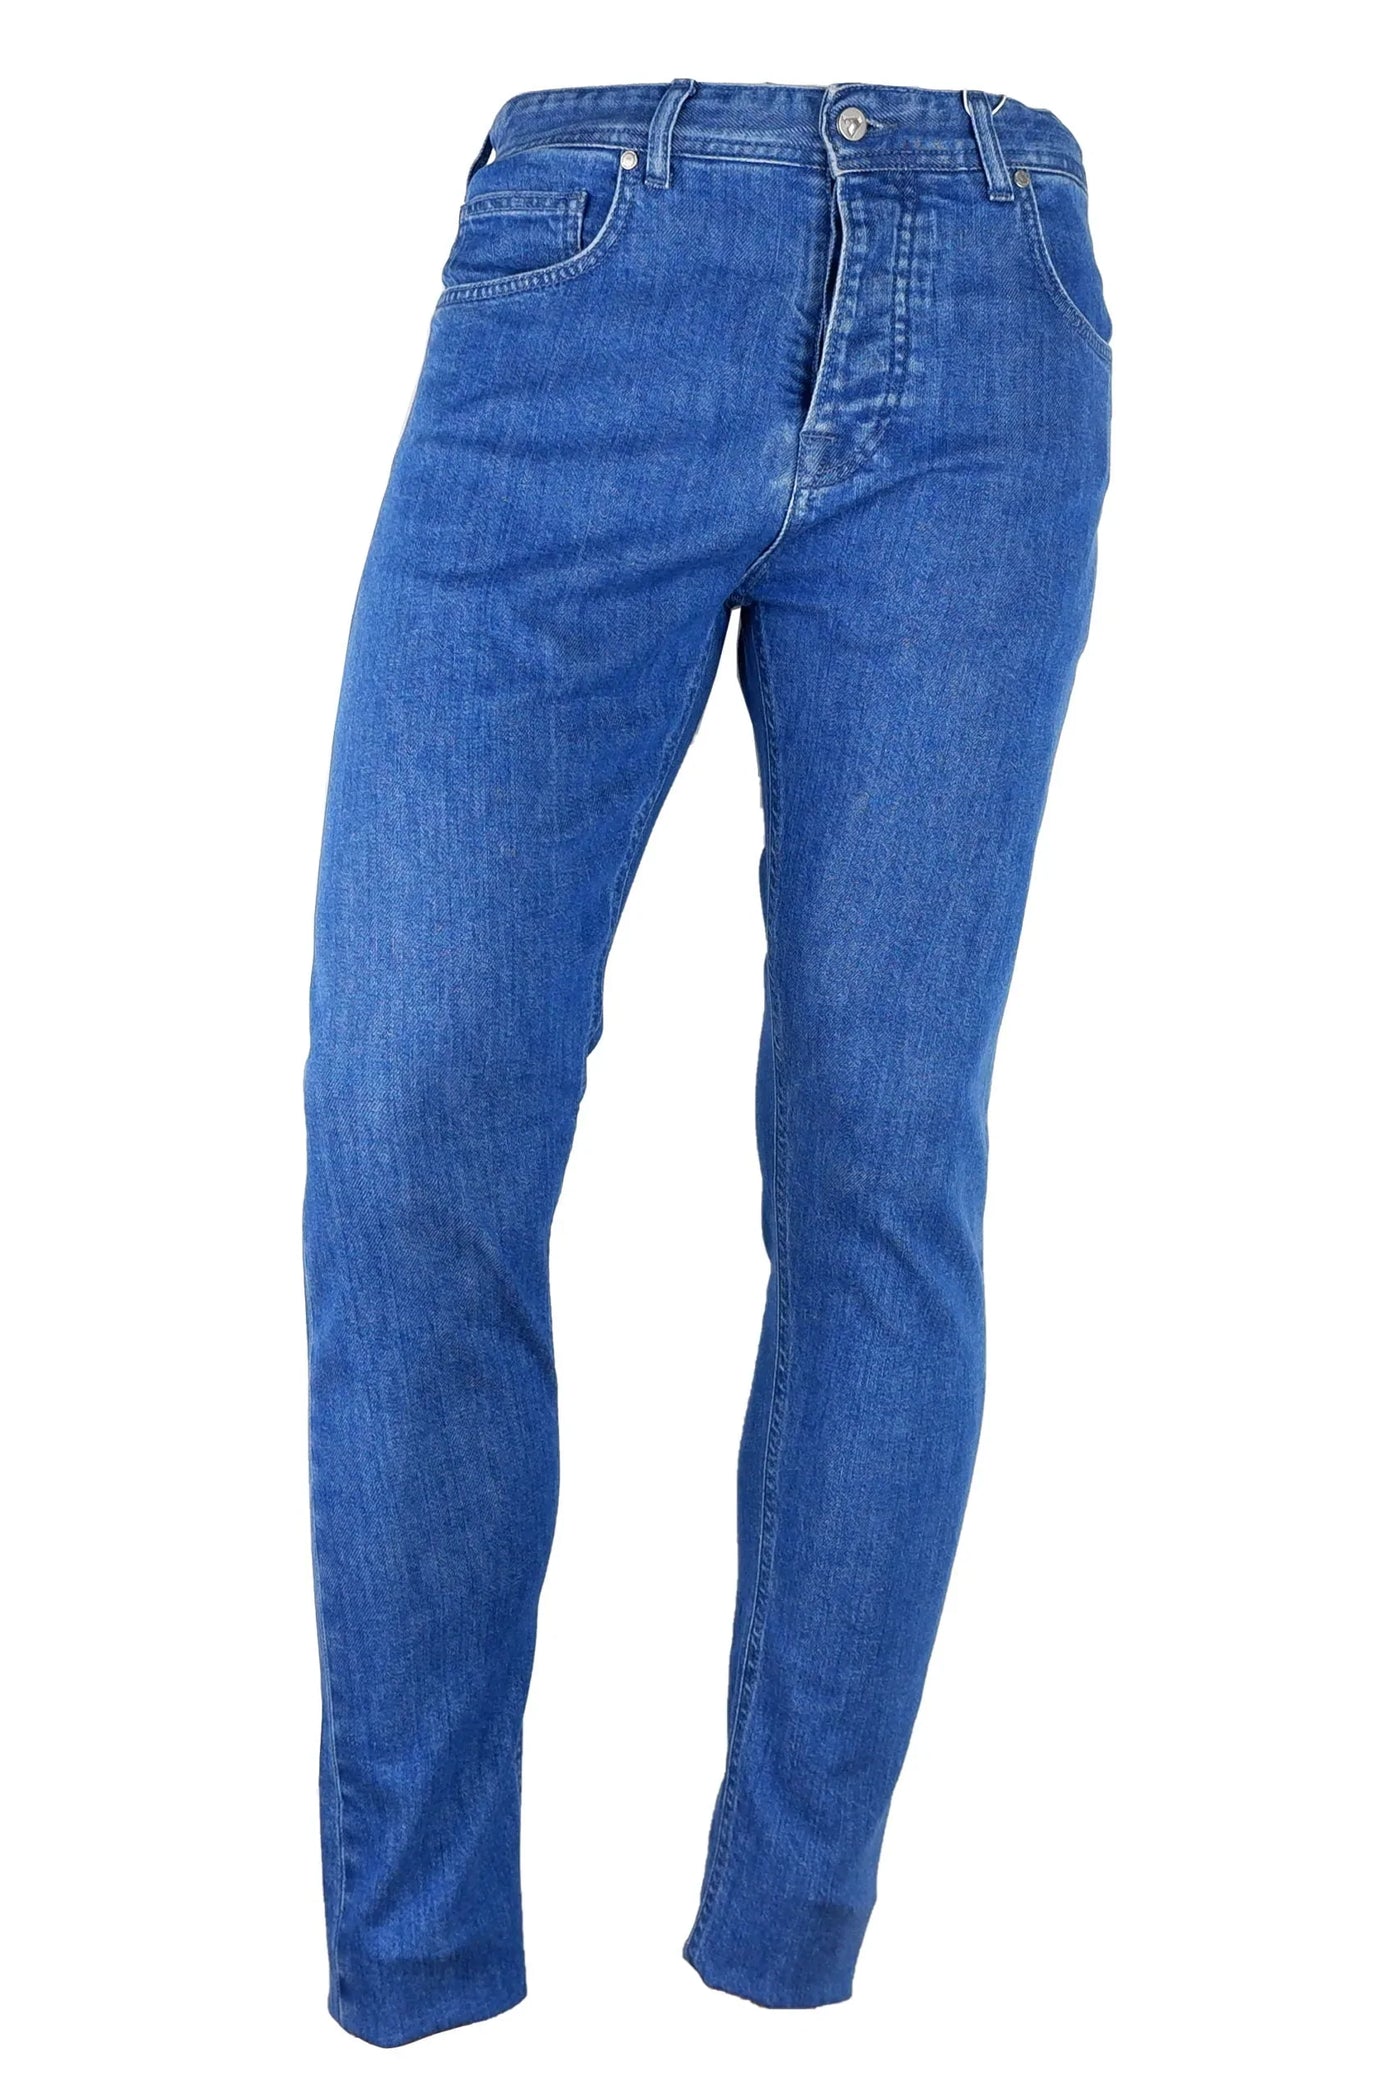 Aquascutum Light Blue Cotton Jeans & Pant #men, Aquascutum, feed-1, Jeans & Pants - Men - Clothing, Light Blue, W30, W31, W32, W33, W34 at SEYMAYKA